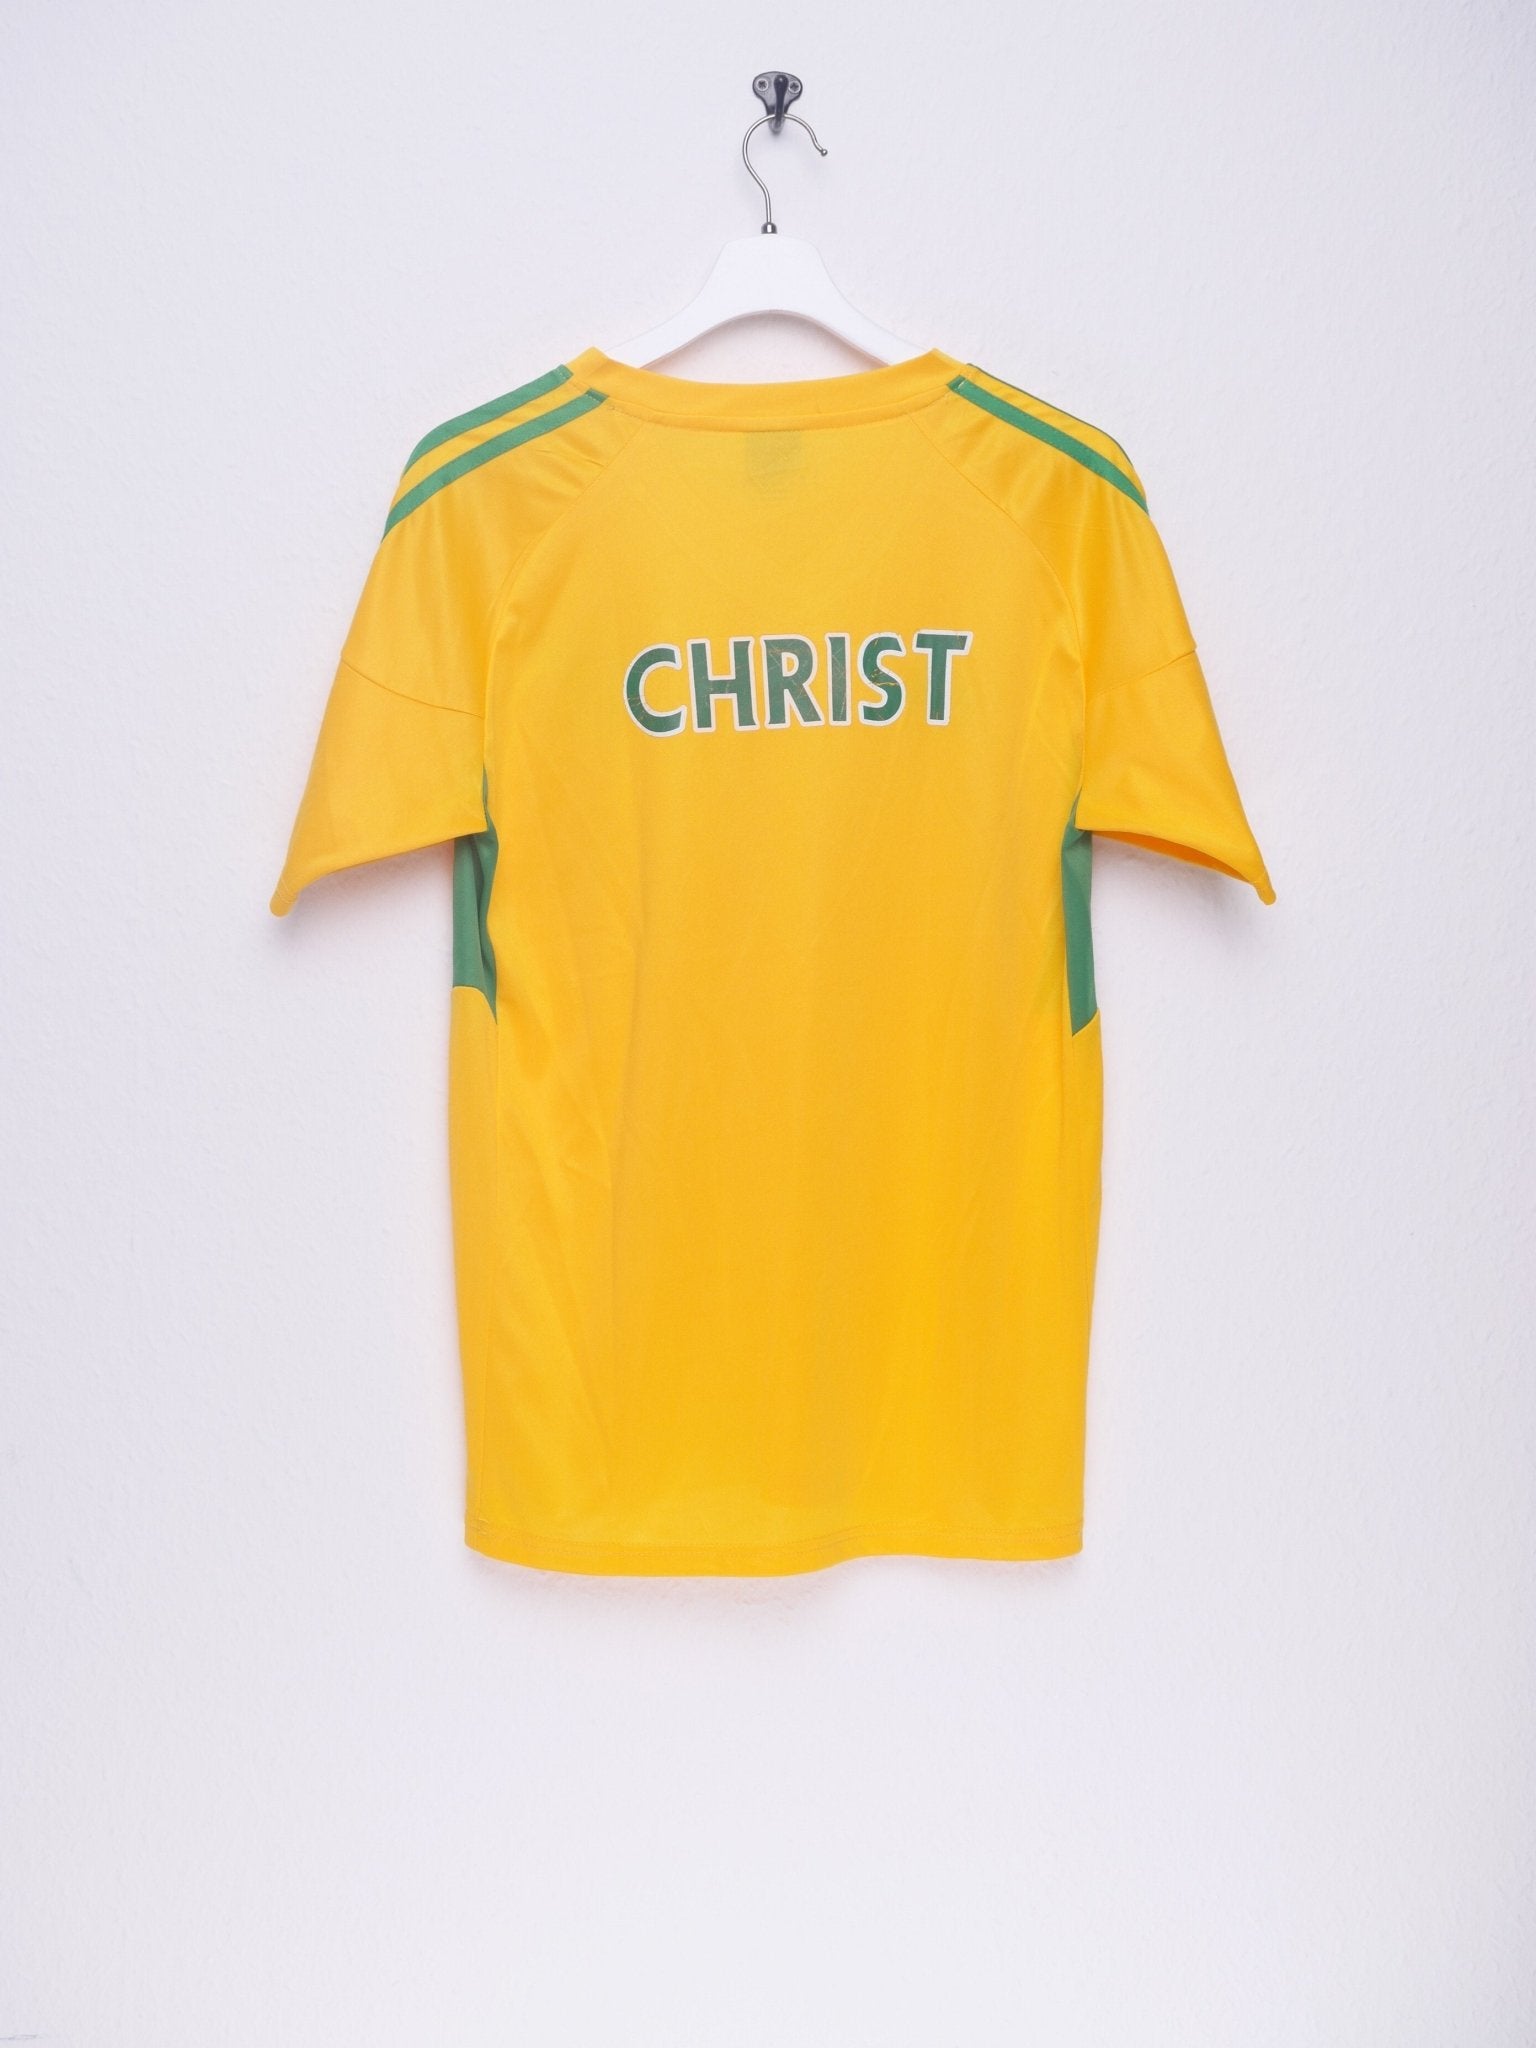 adidas Congo Fecofoot Christ embroidered Logo Jersey Shirt - Peeces